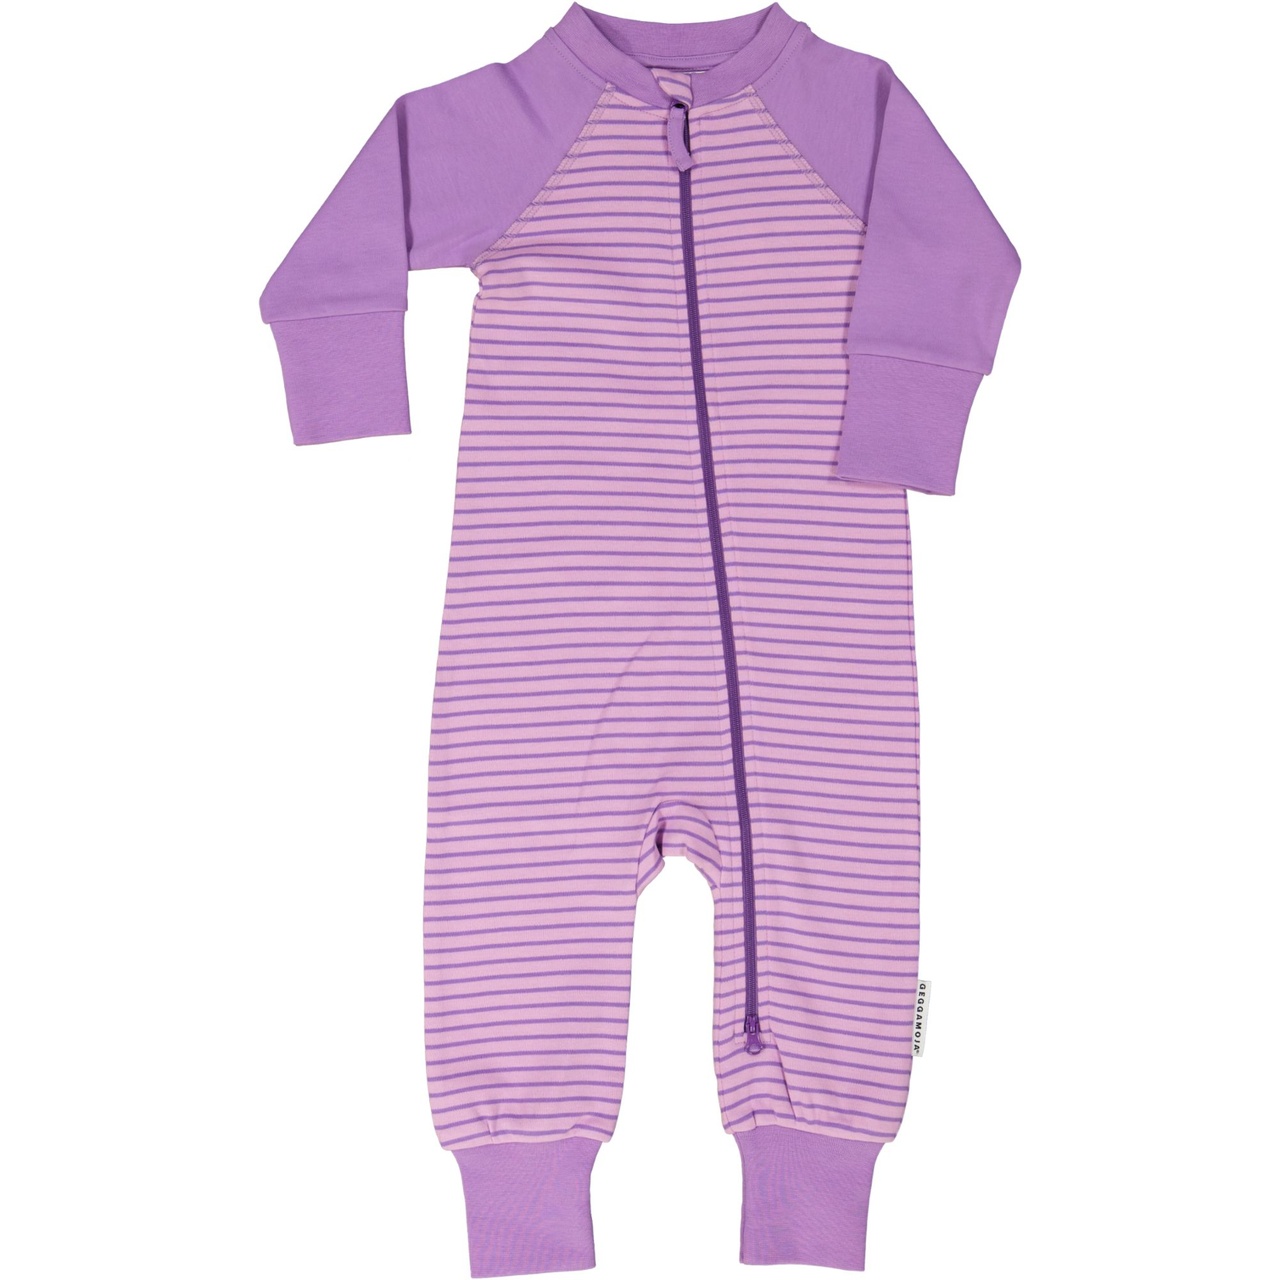 Pyjamas L.purple/purple  110/116